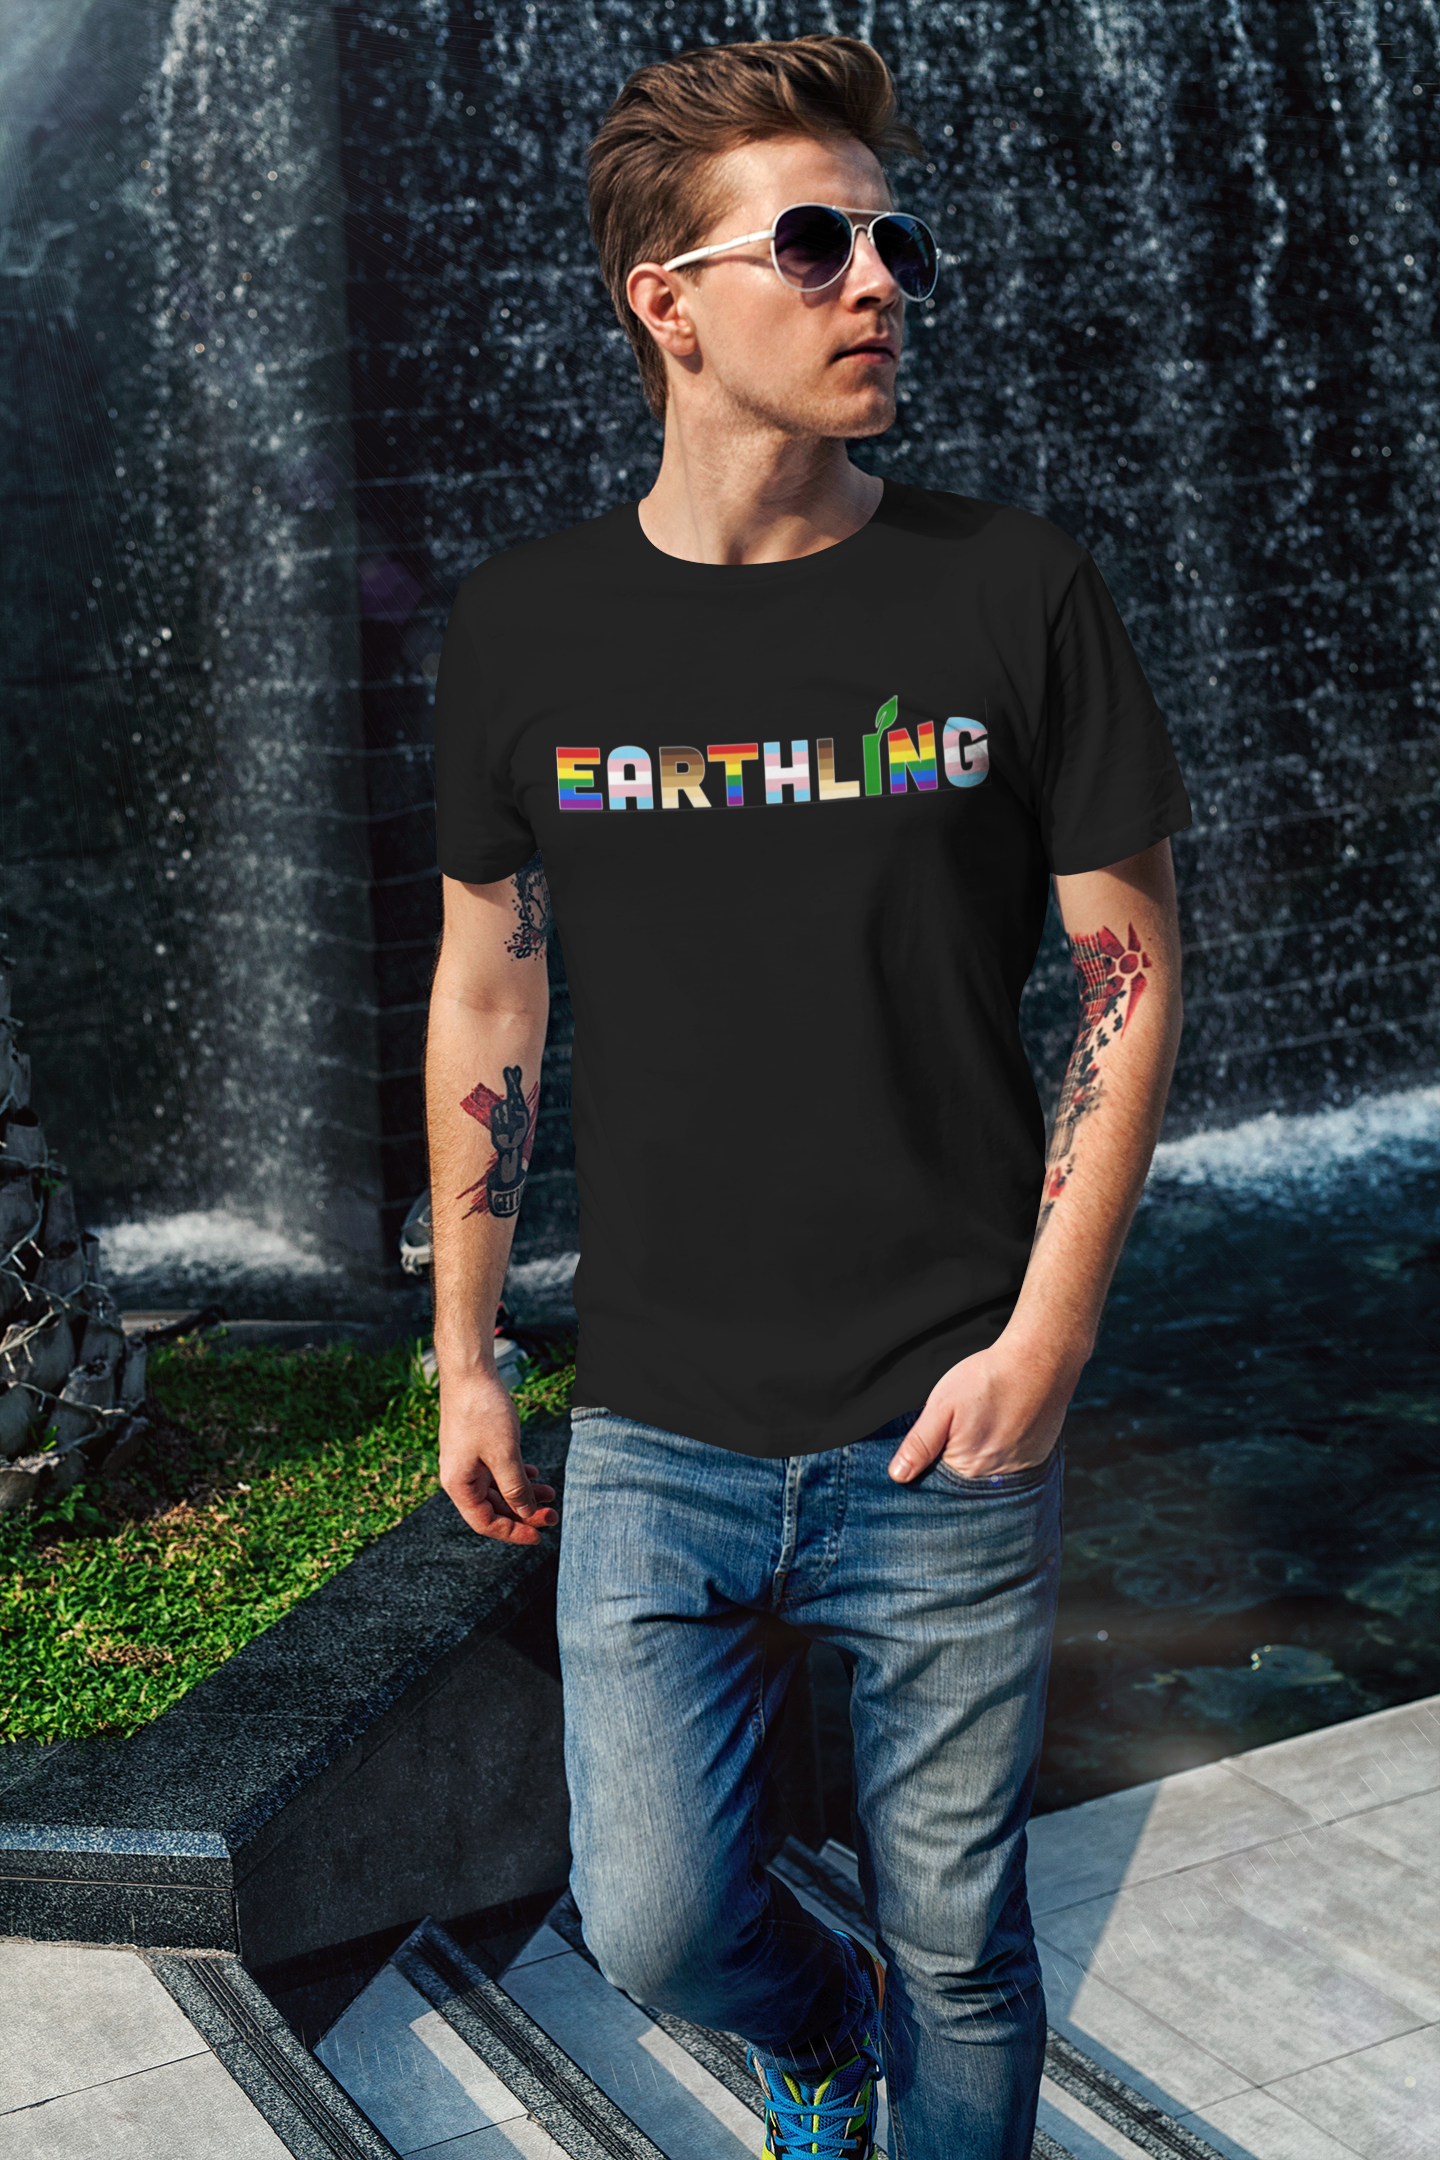 Earthling PRIDE GTC Unisex Shirt